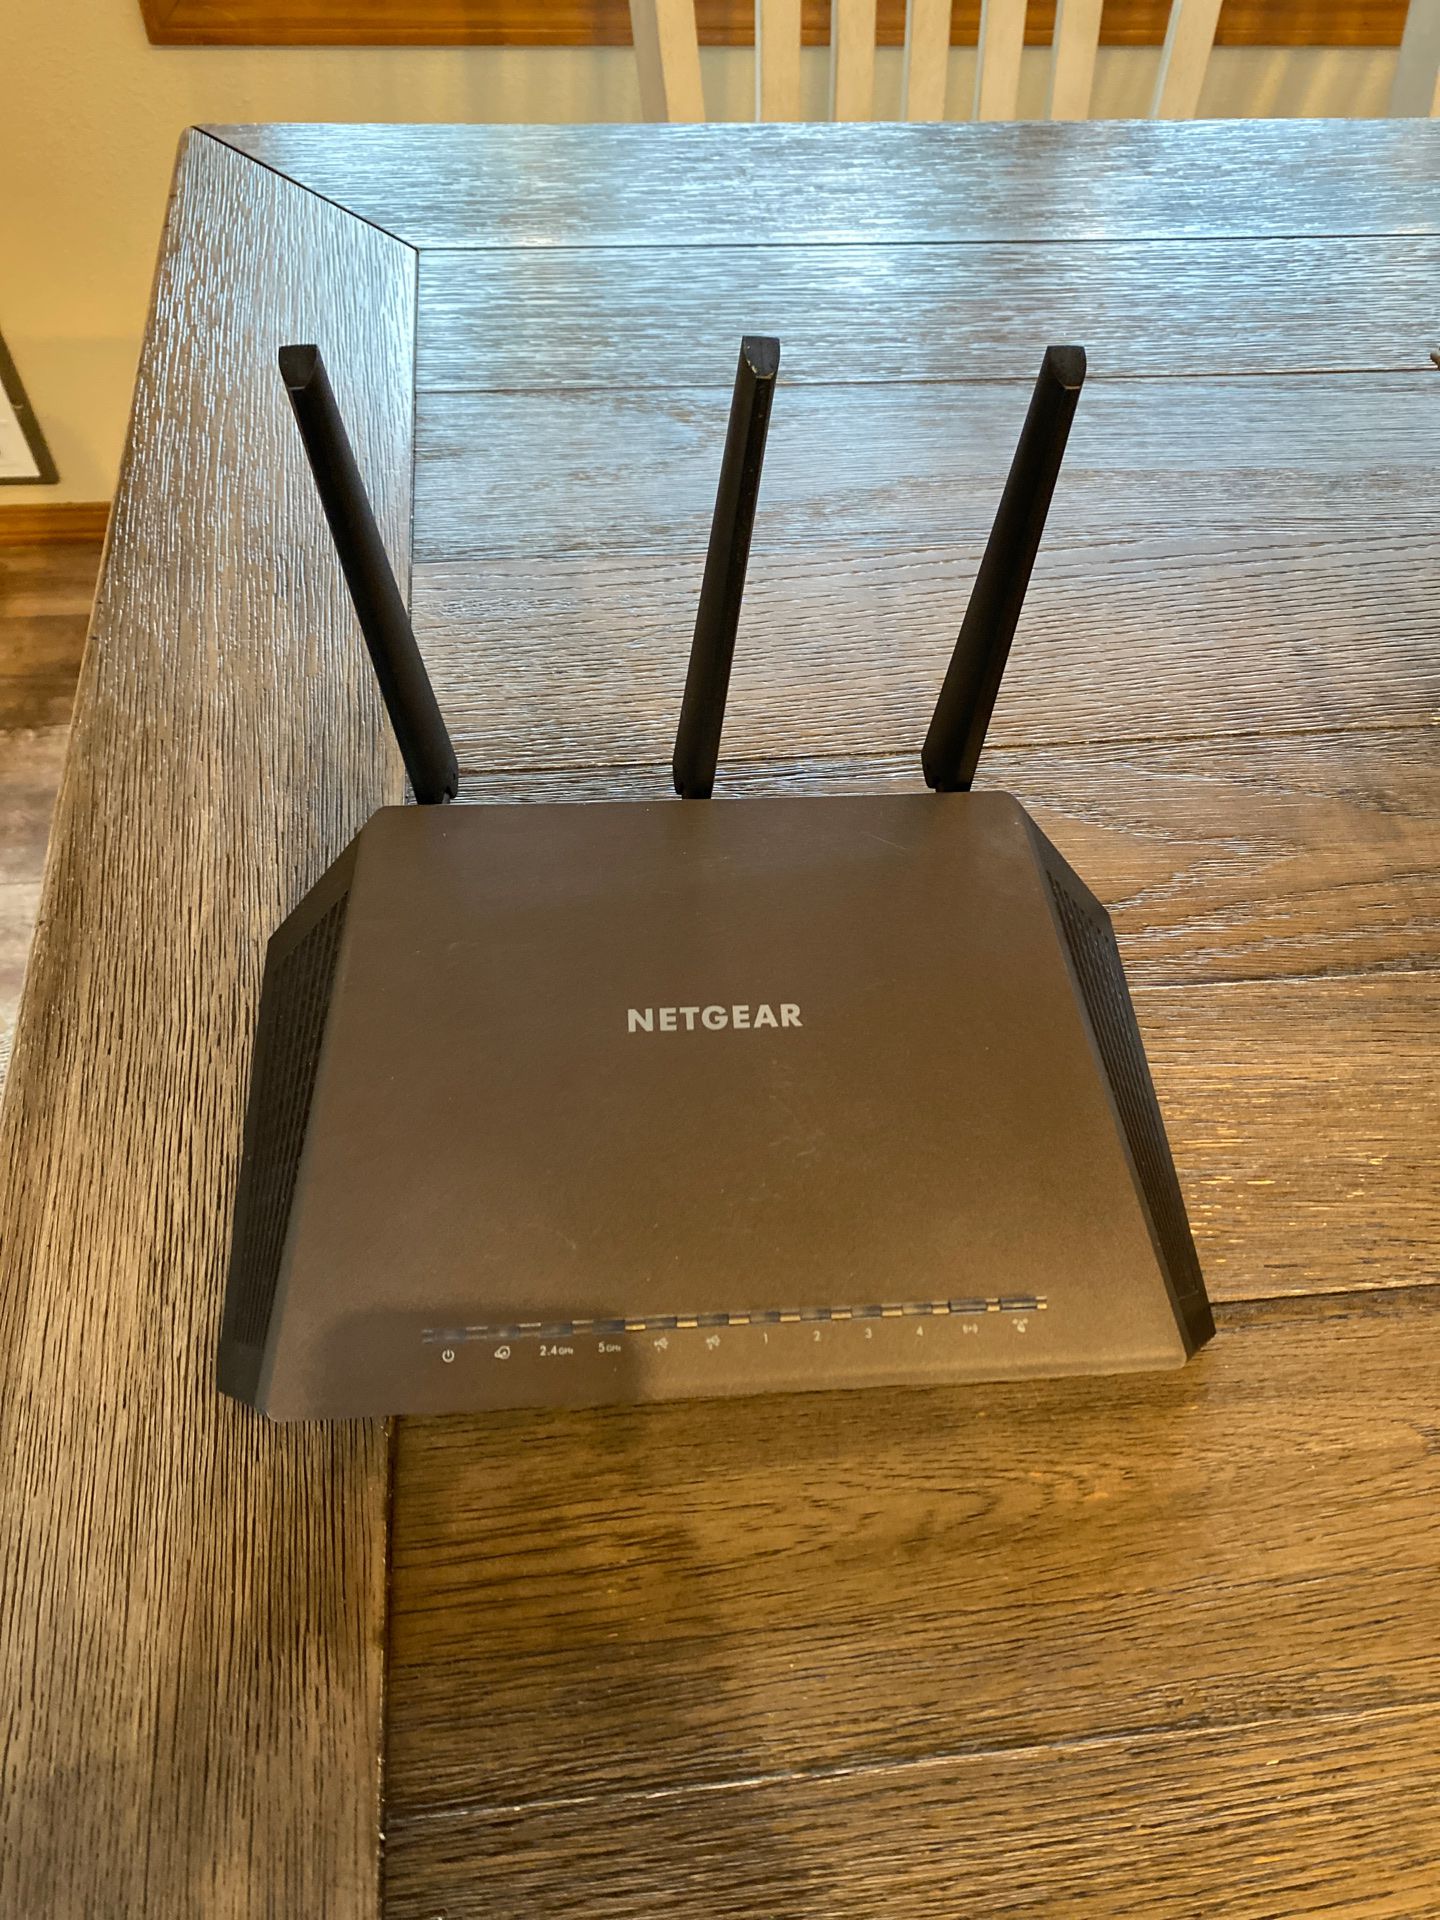 Nighthawk WiFi Router. Model R7000